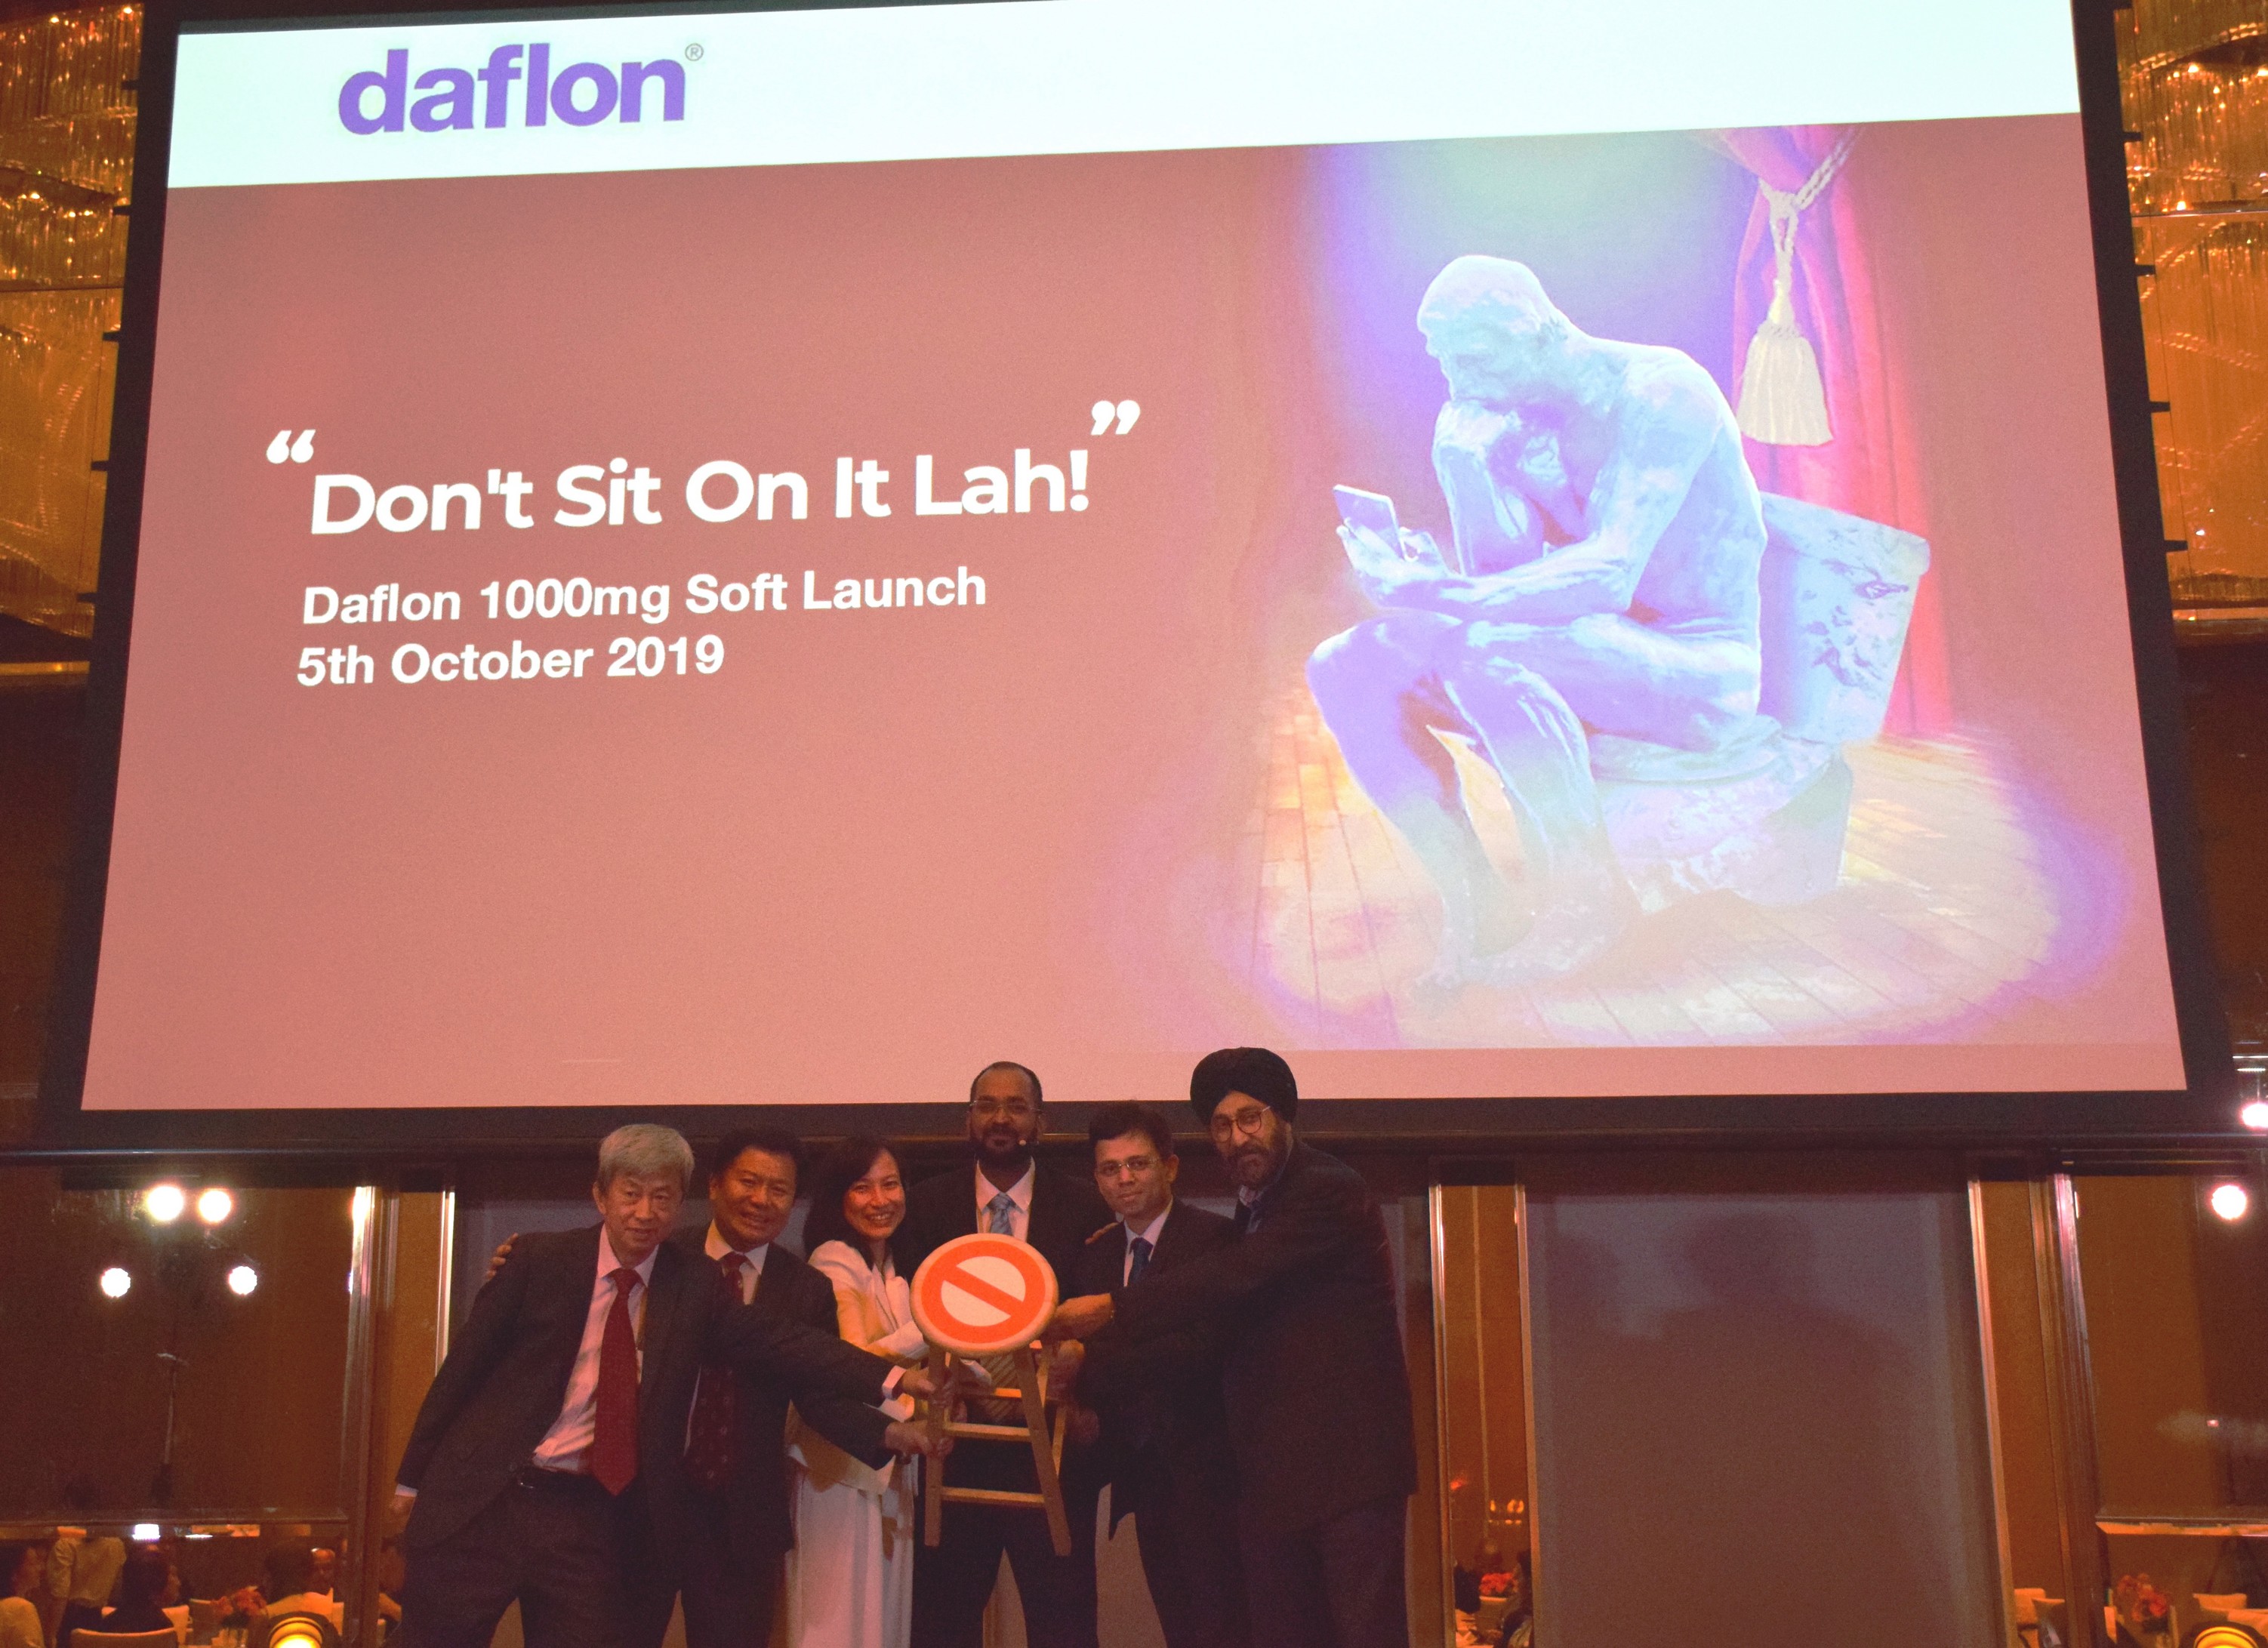 Daflon - Servier Malaysia